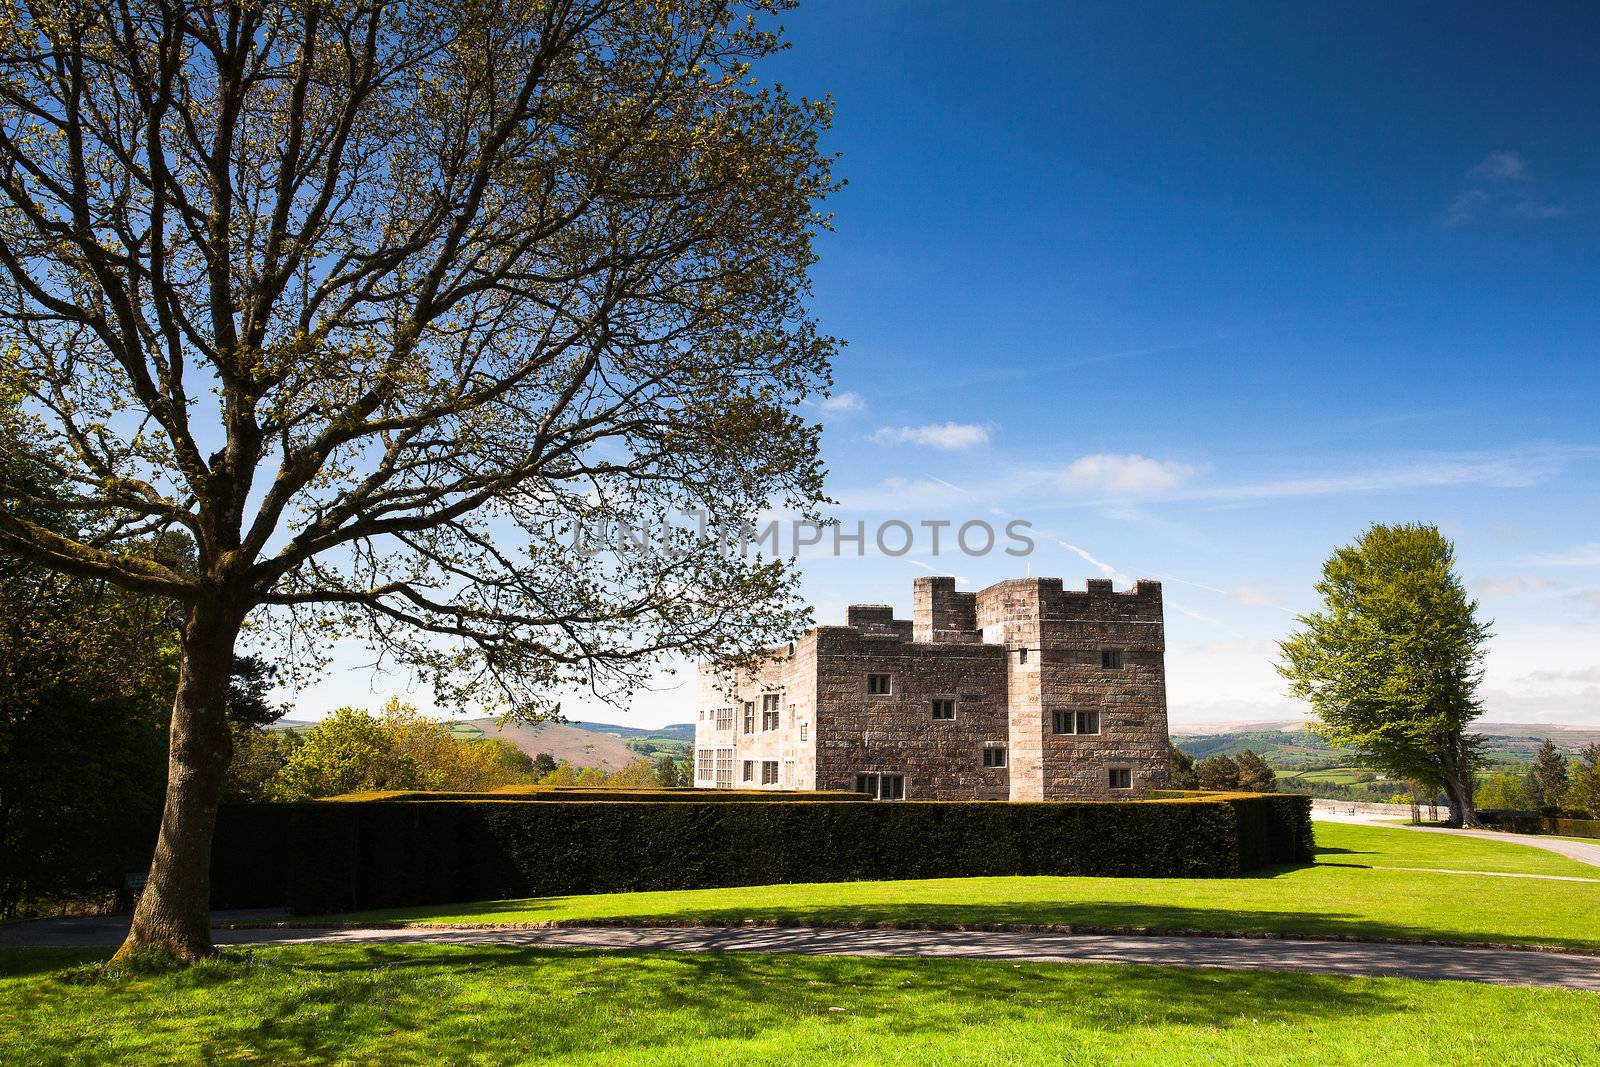 Castle Drogo in Great Britain